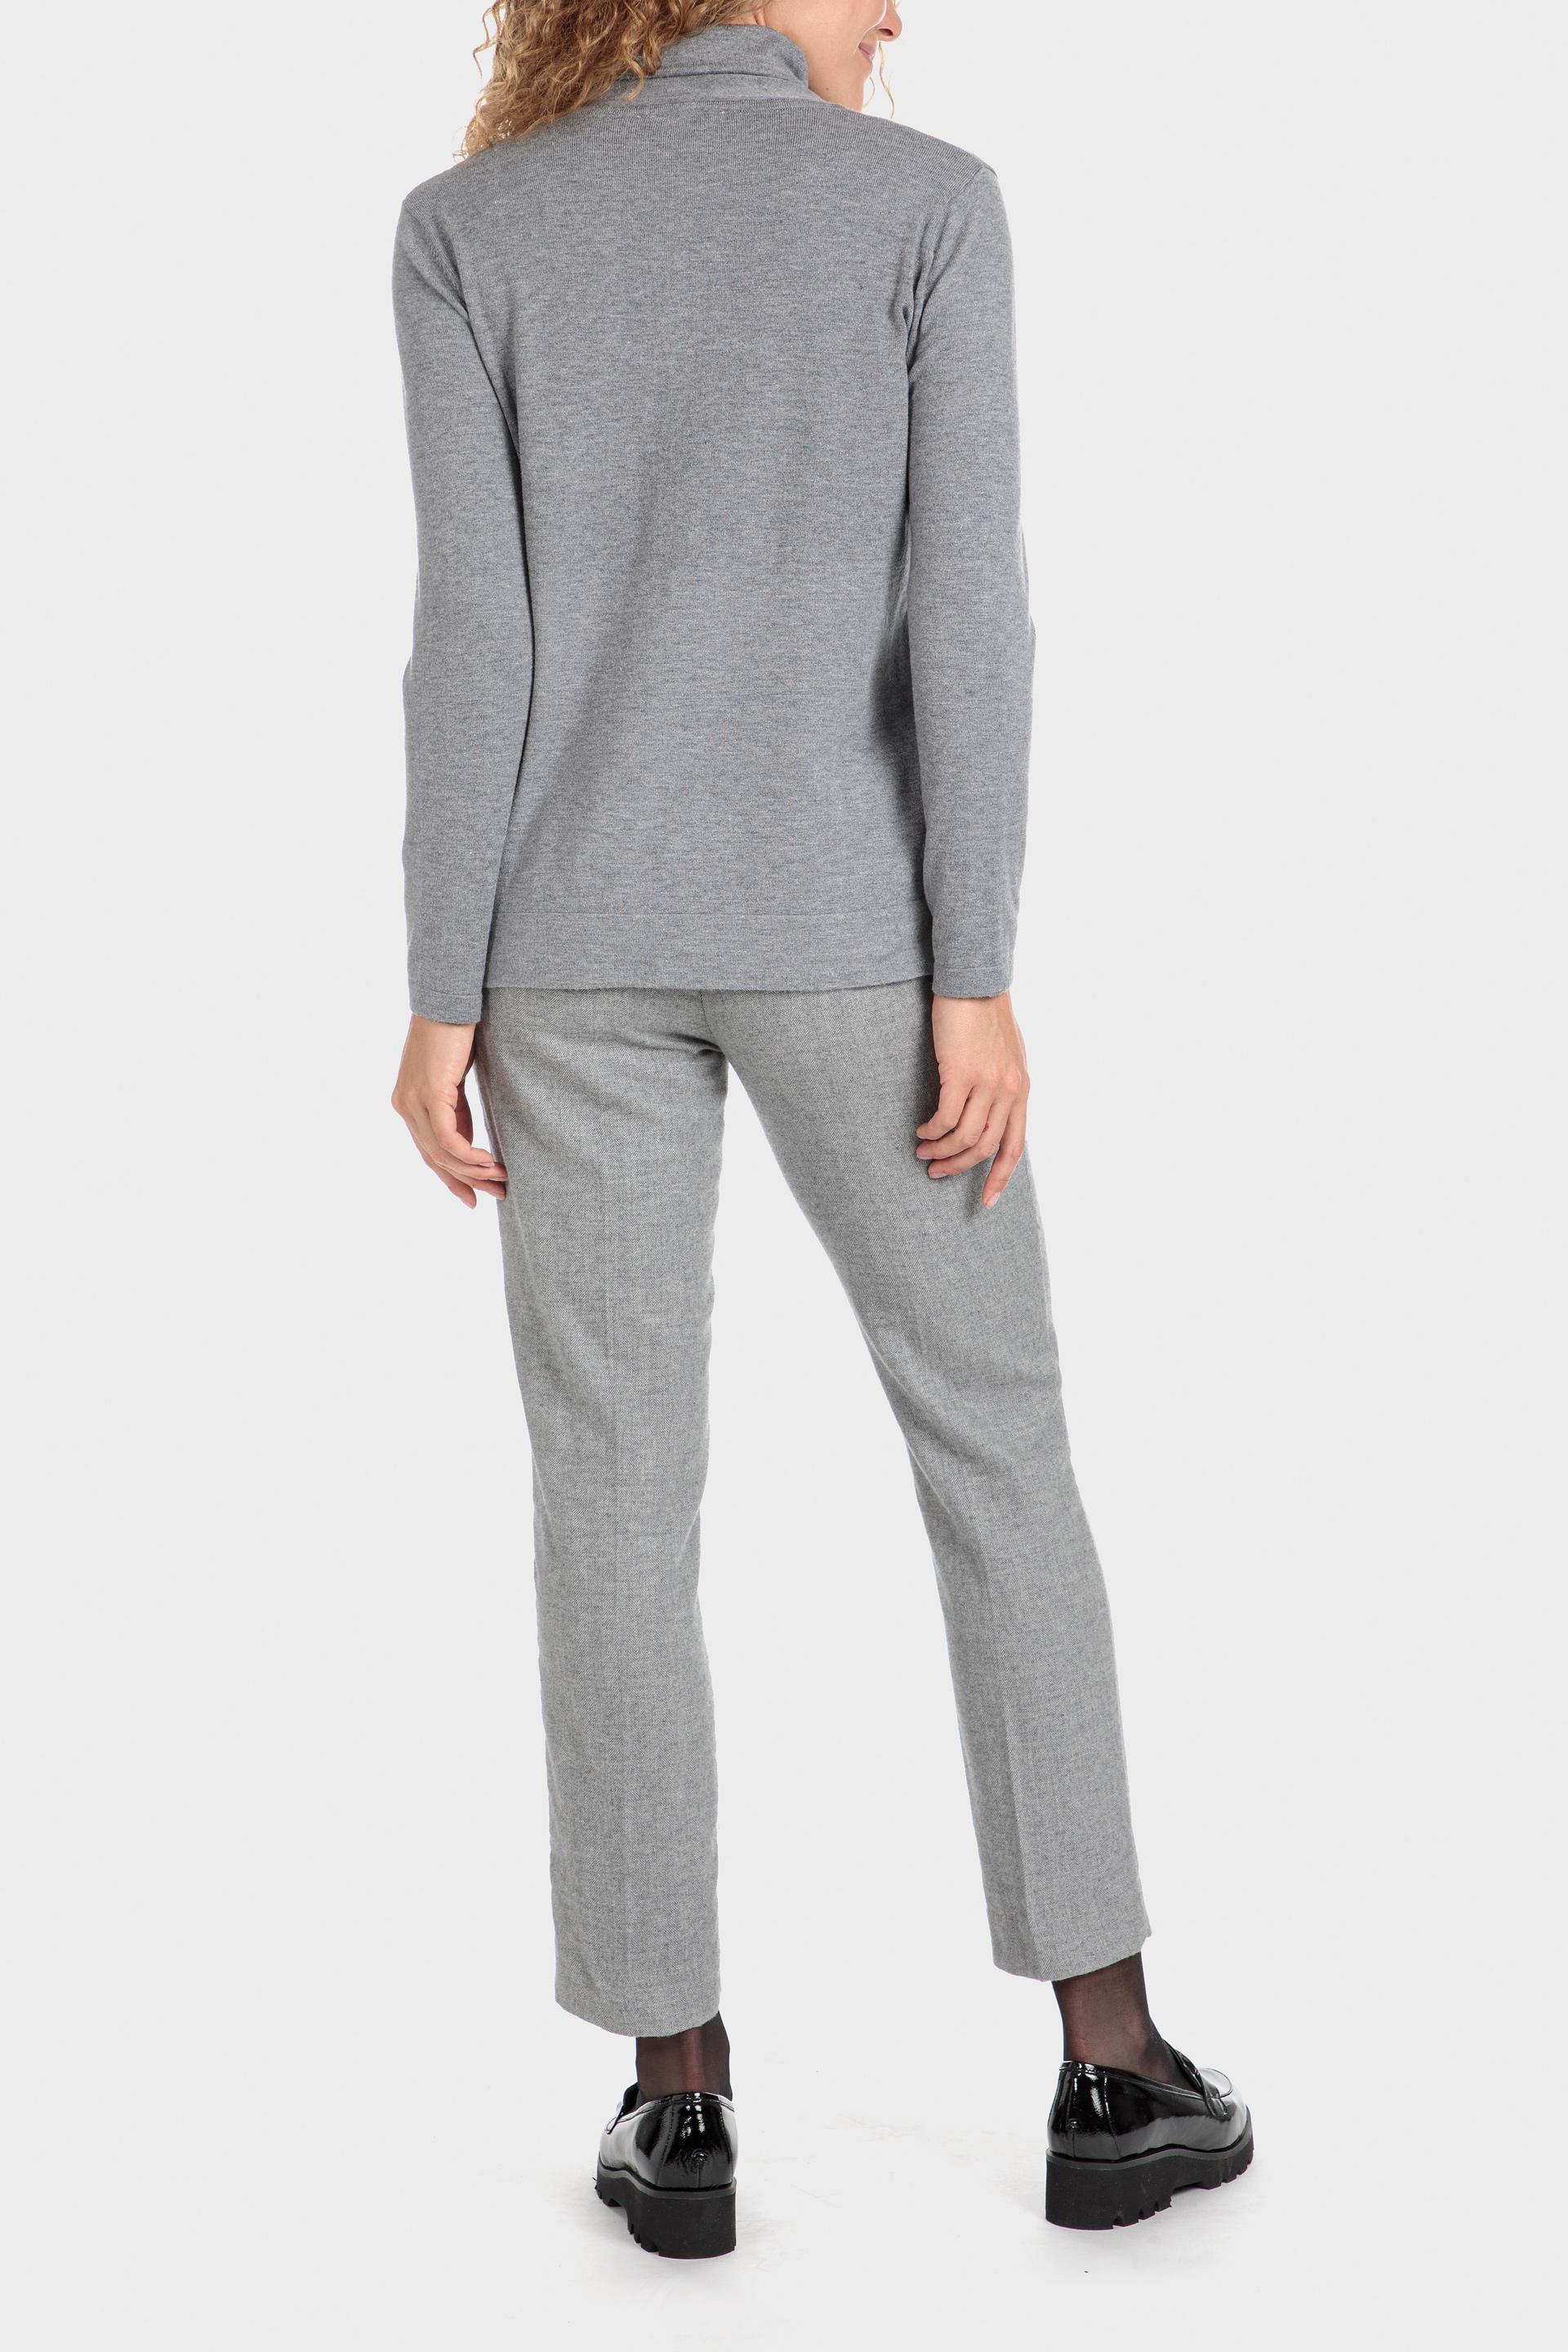 Punt Roma - Grey Turtleneck Sweater